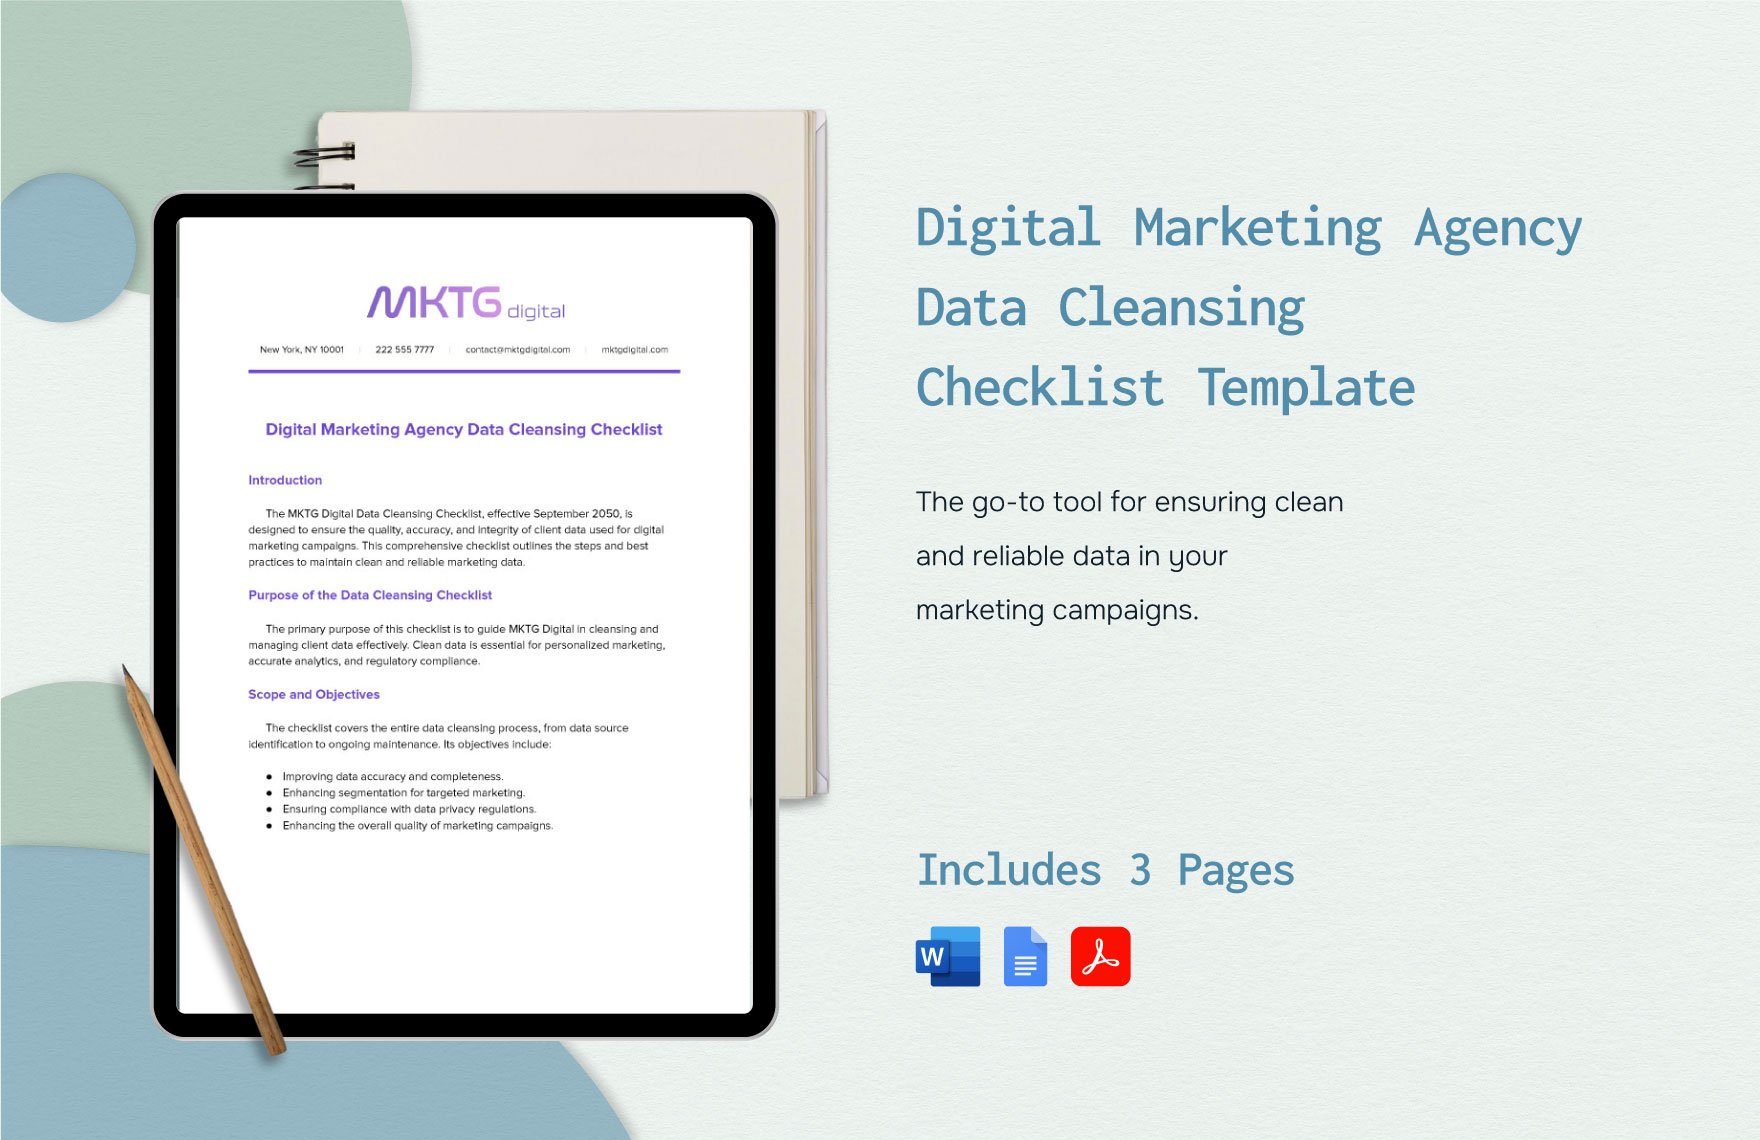 Digital Marketing Agency Data Cleansing Checklist Template